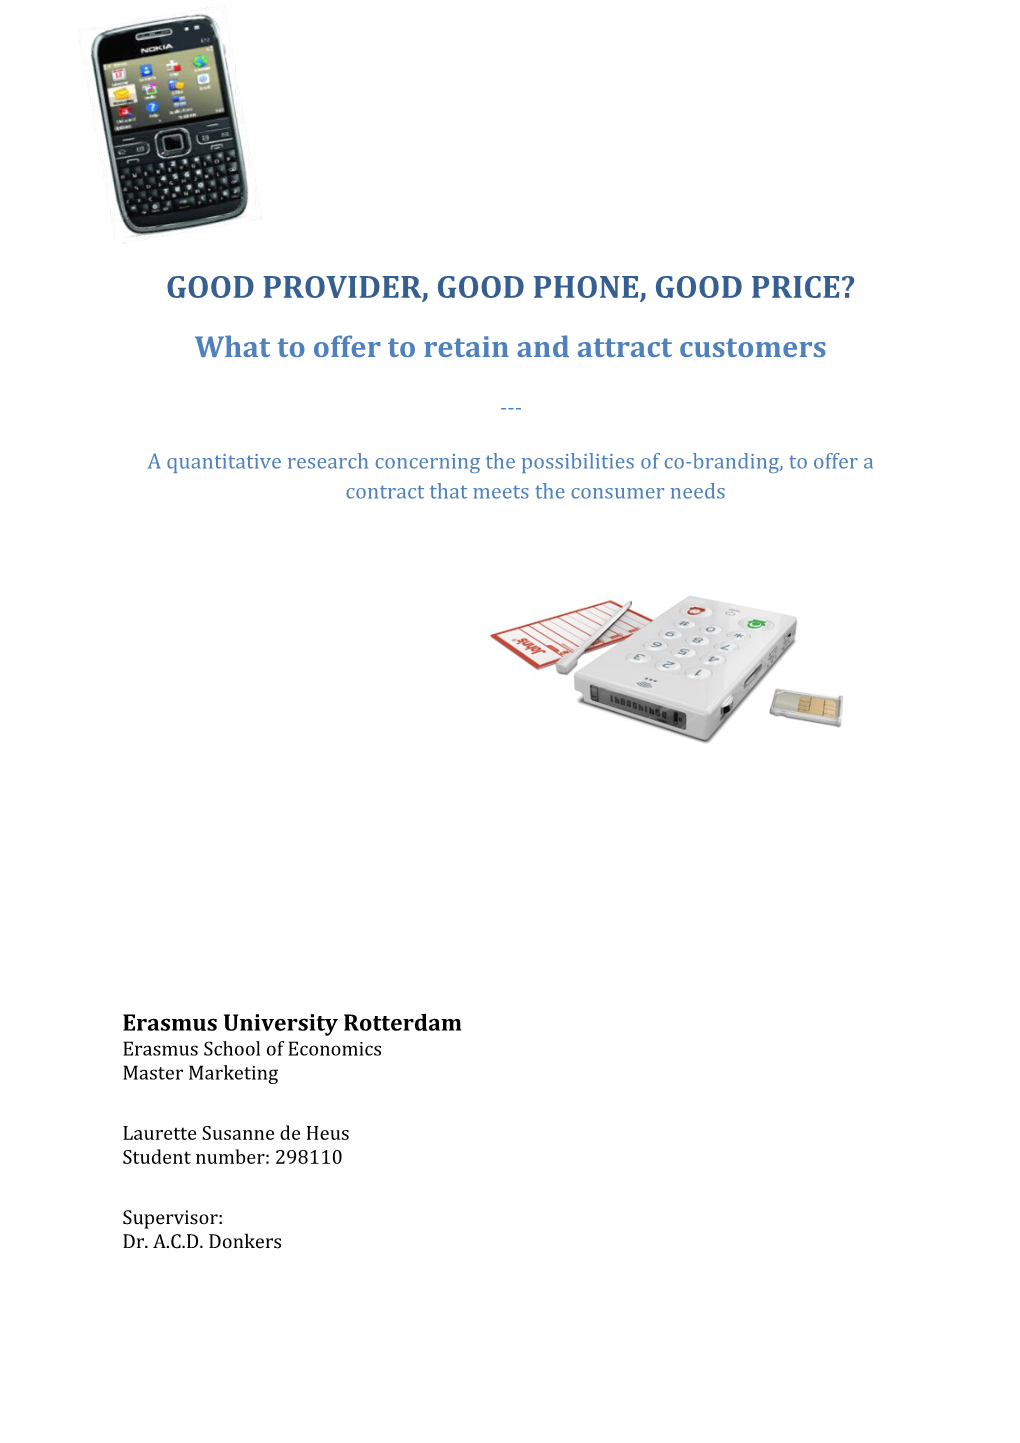 Good Provider, Good Phone, Good Price